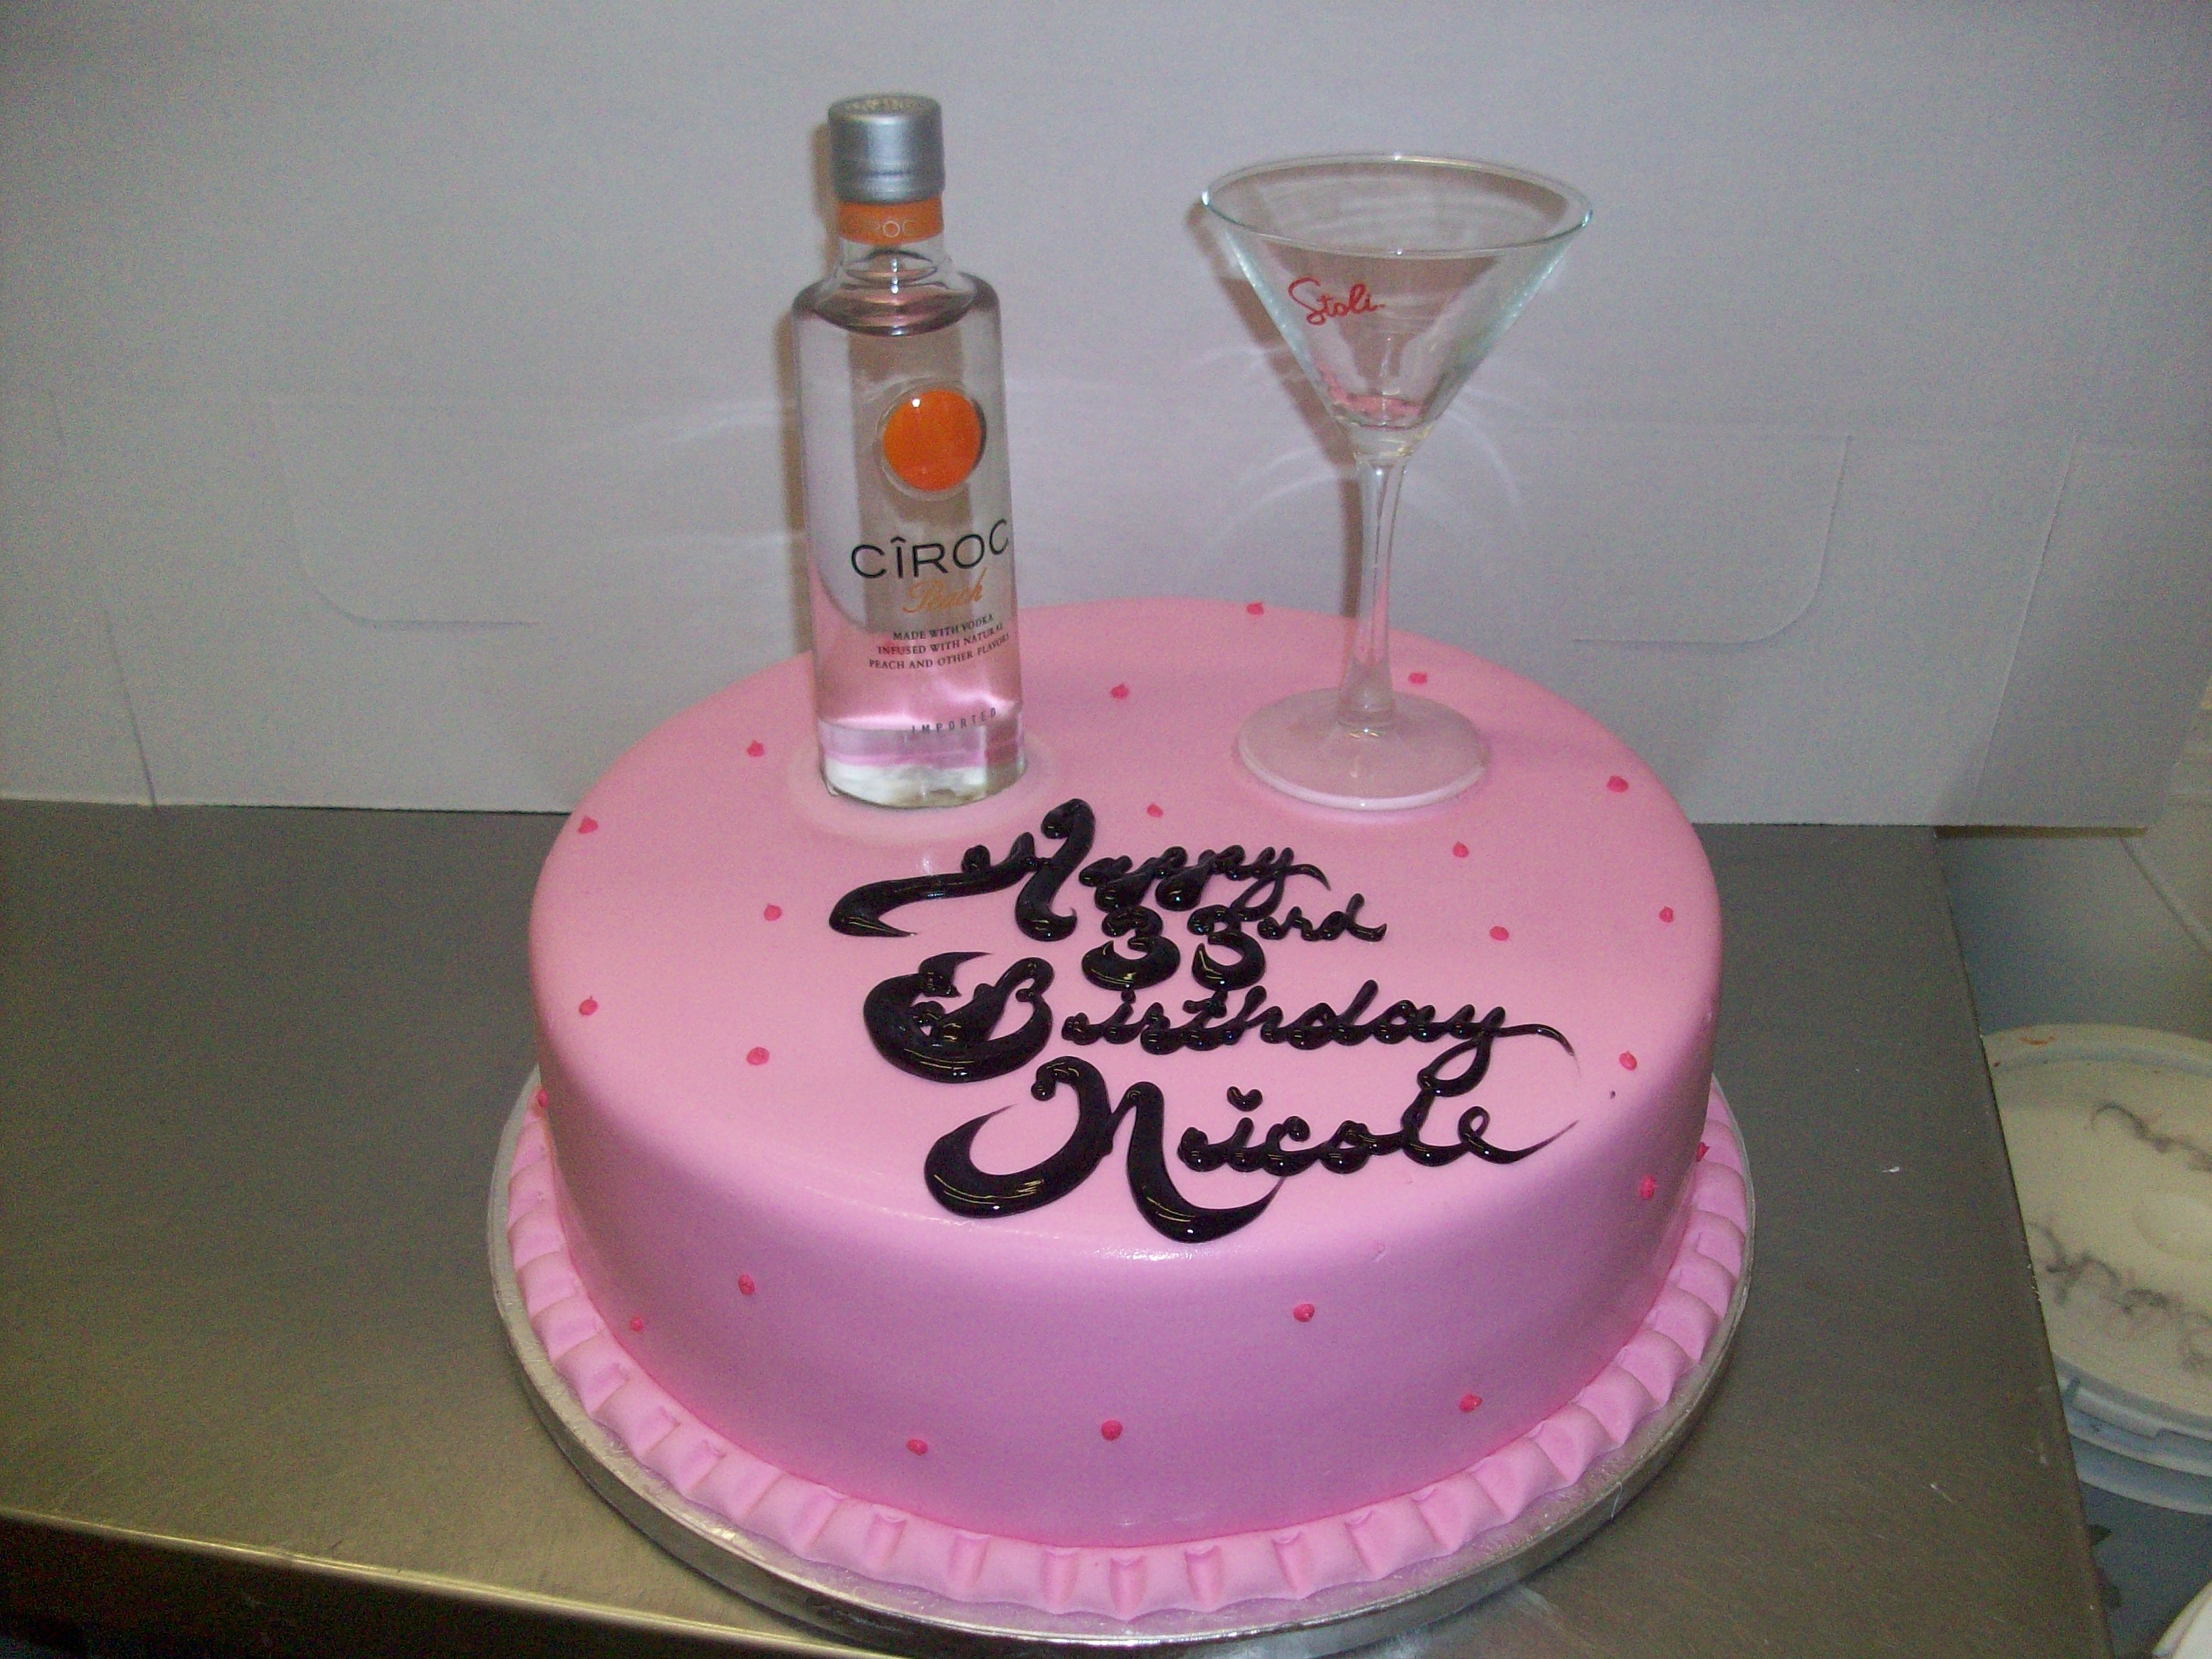 Birthday Cake with Ciroc Bottle